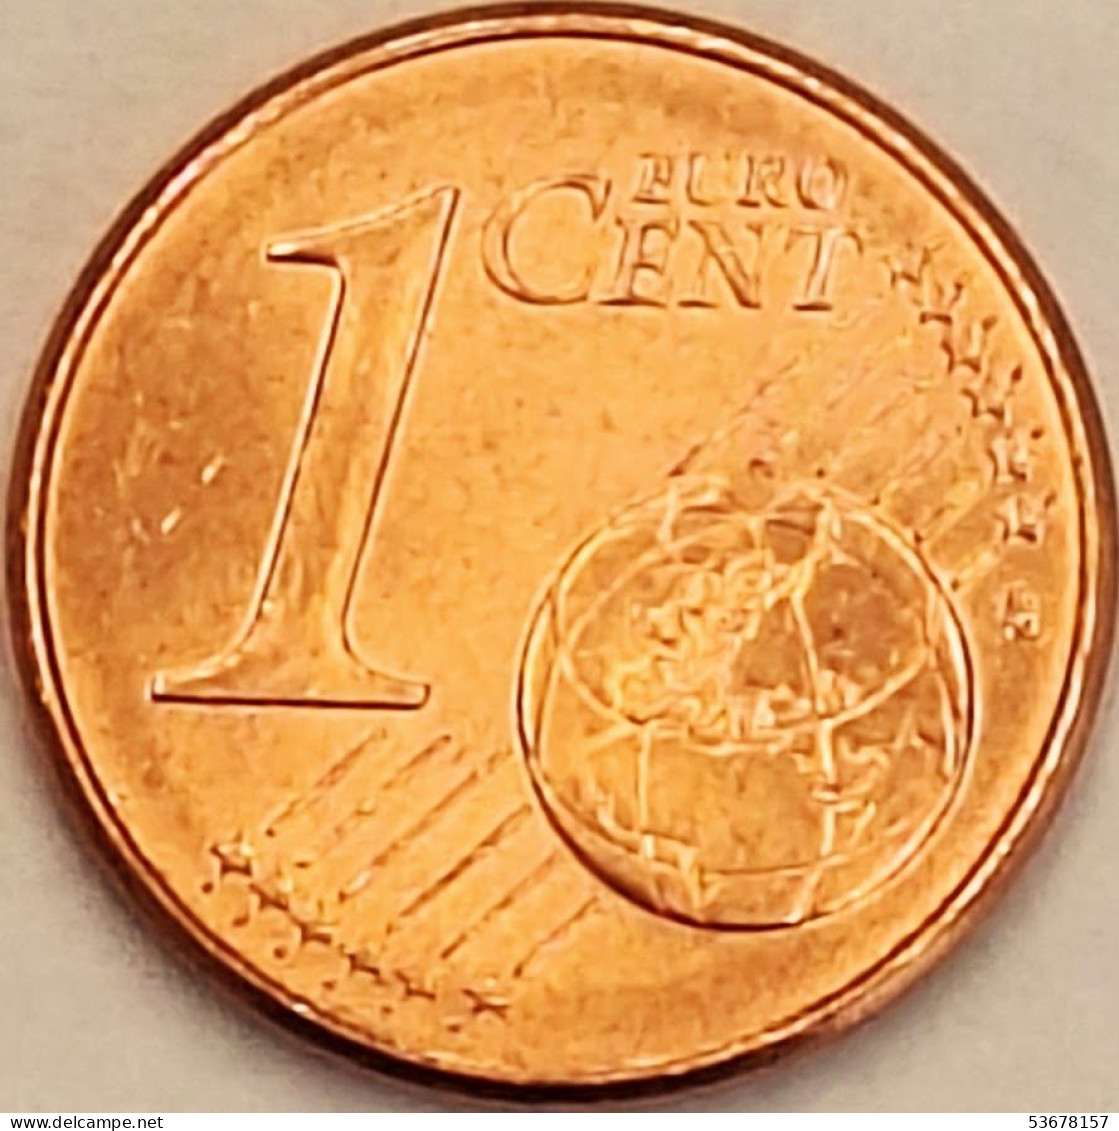 France - Euro Cent 2012, KM# 1282 (#4367) - France